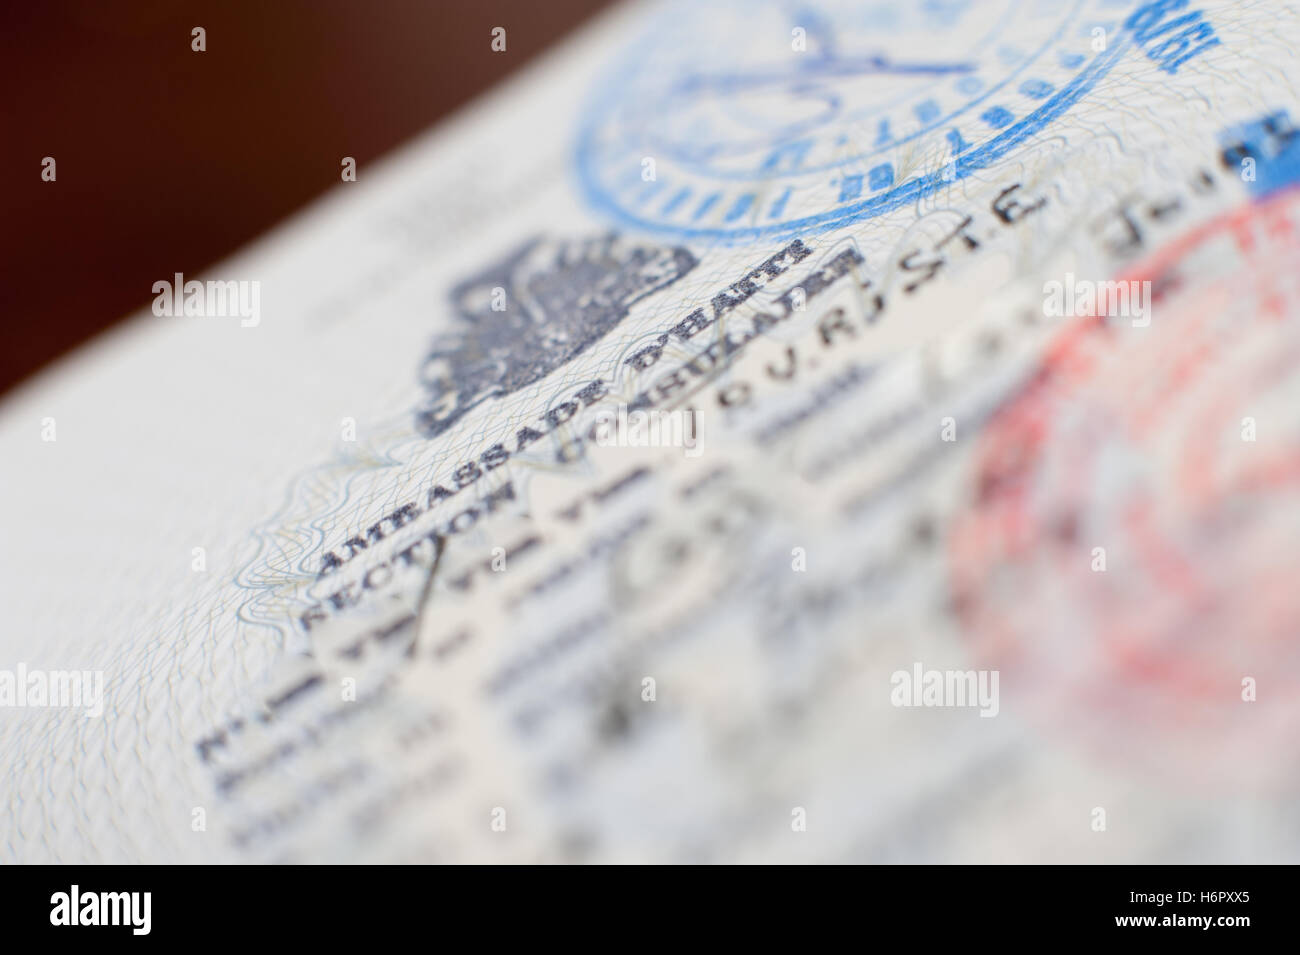 Detail of old passport with Haiti embassy visa stamp, selective focus Stock Photo